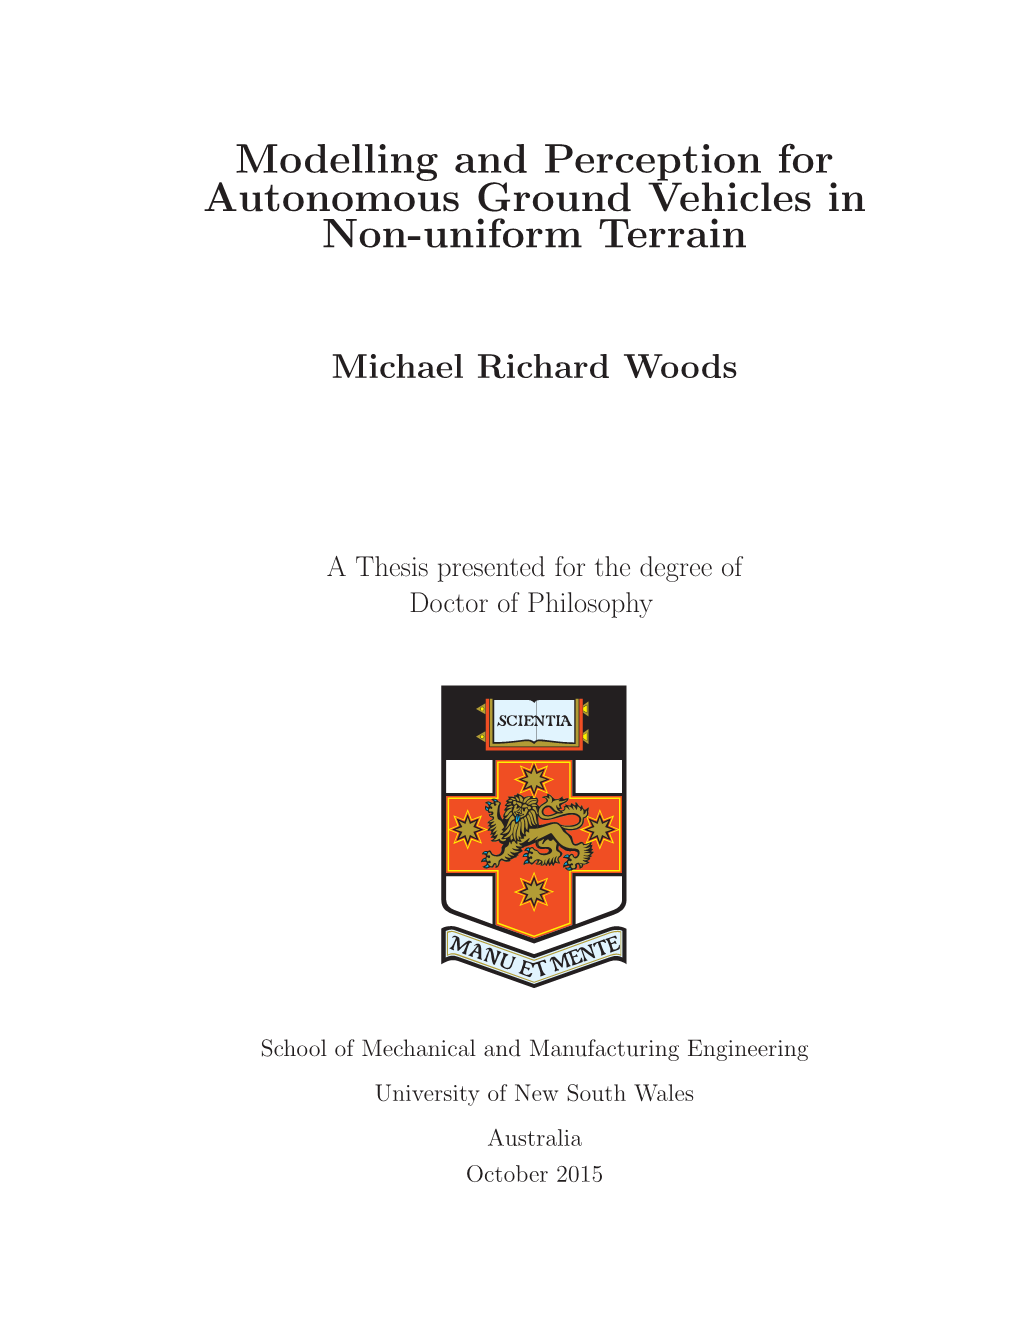 Modelling and Perception for Autonomous Ground Vehicles in Non-Uniform Terrain